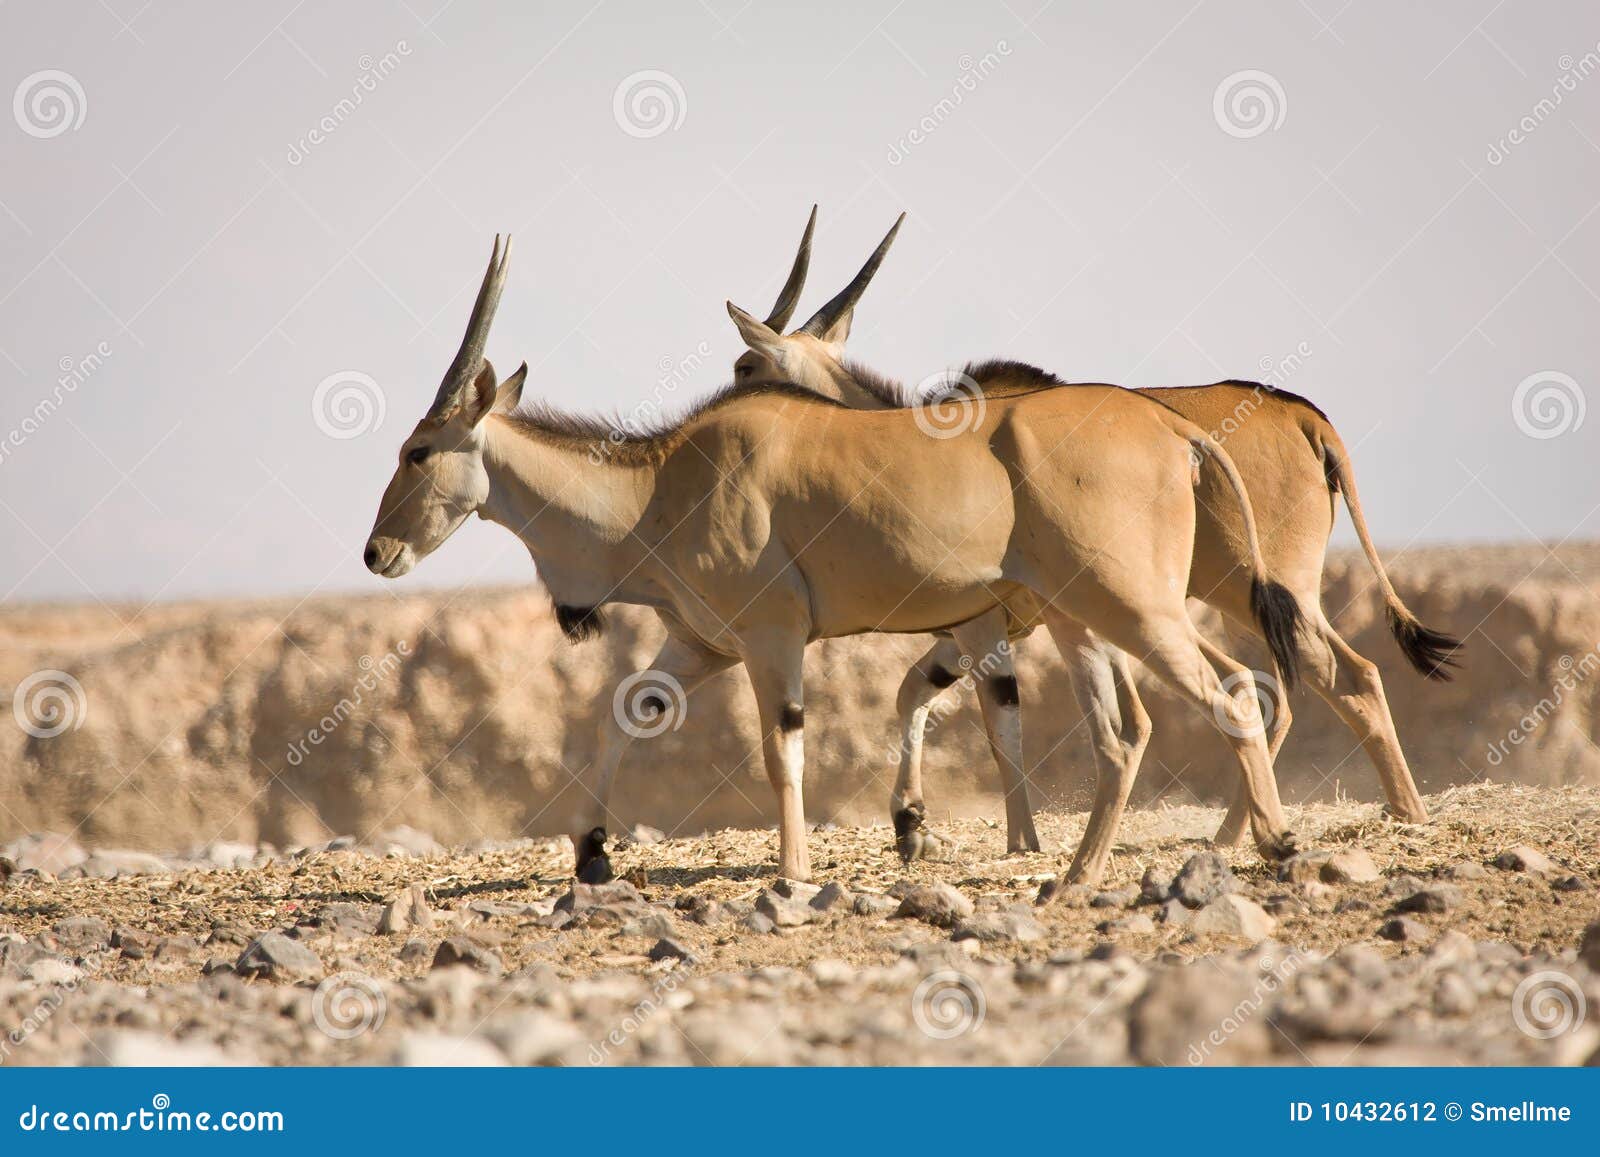 eland antelopes